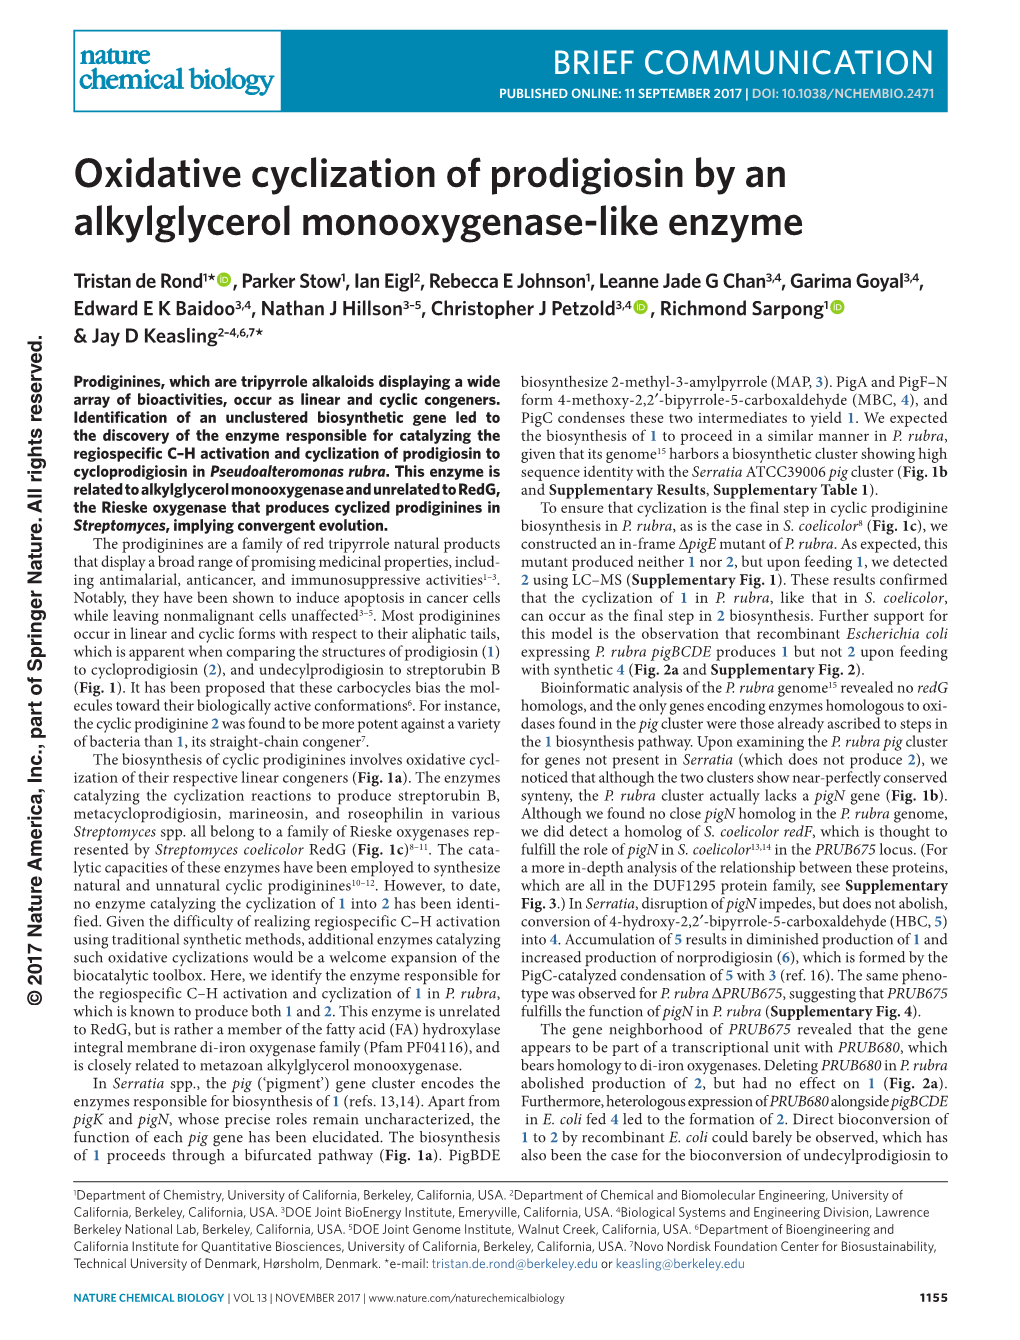 Oxidative Cyclization of Prodigiosin by an Alkylglycerol Monooxygenase-Like Enzyme